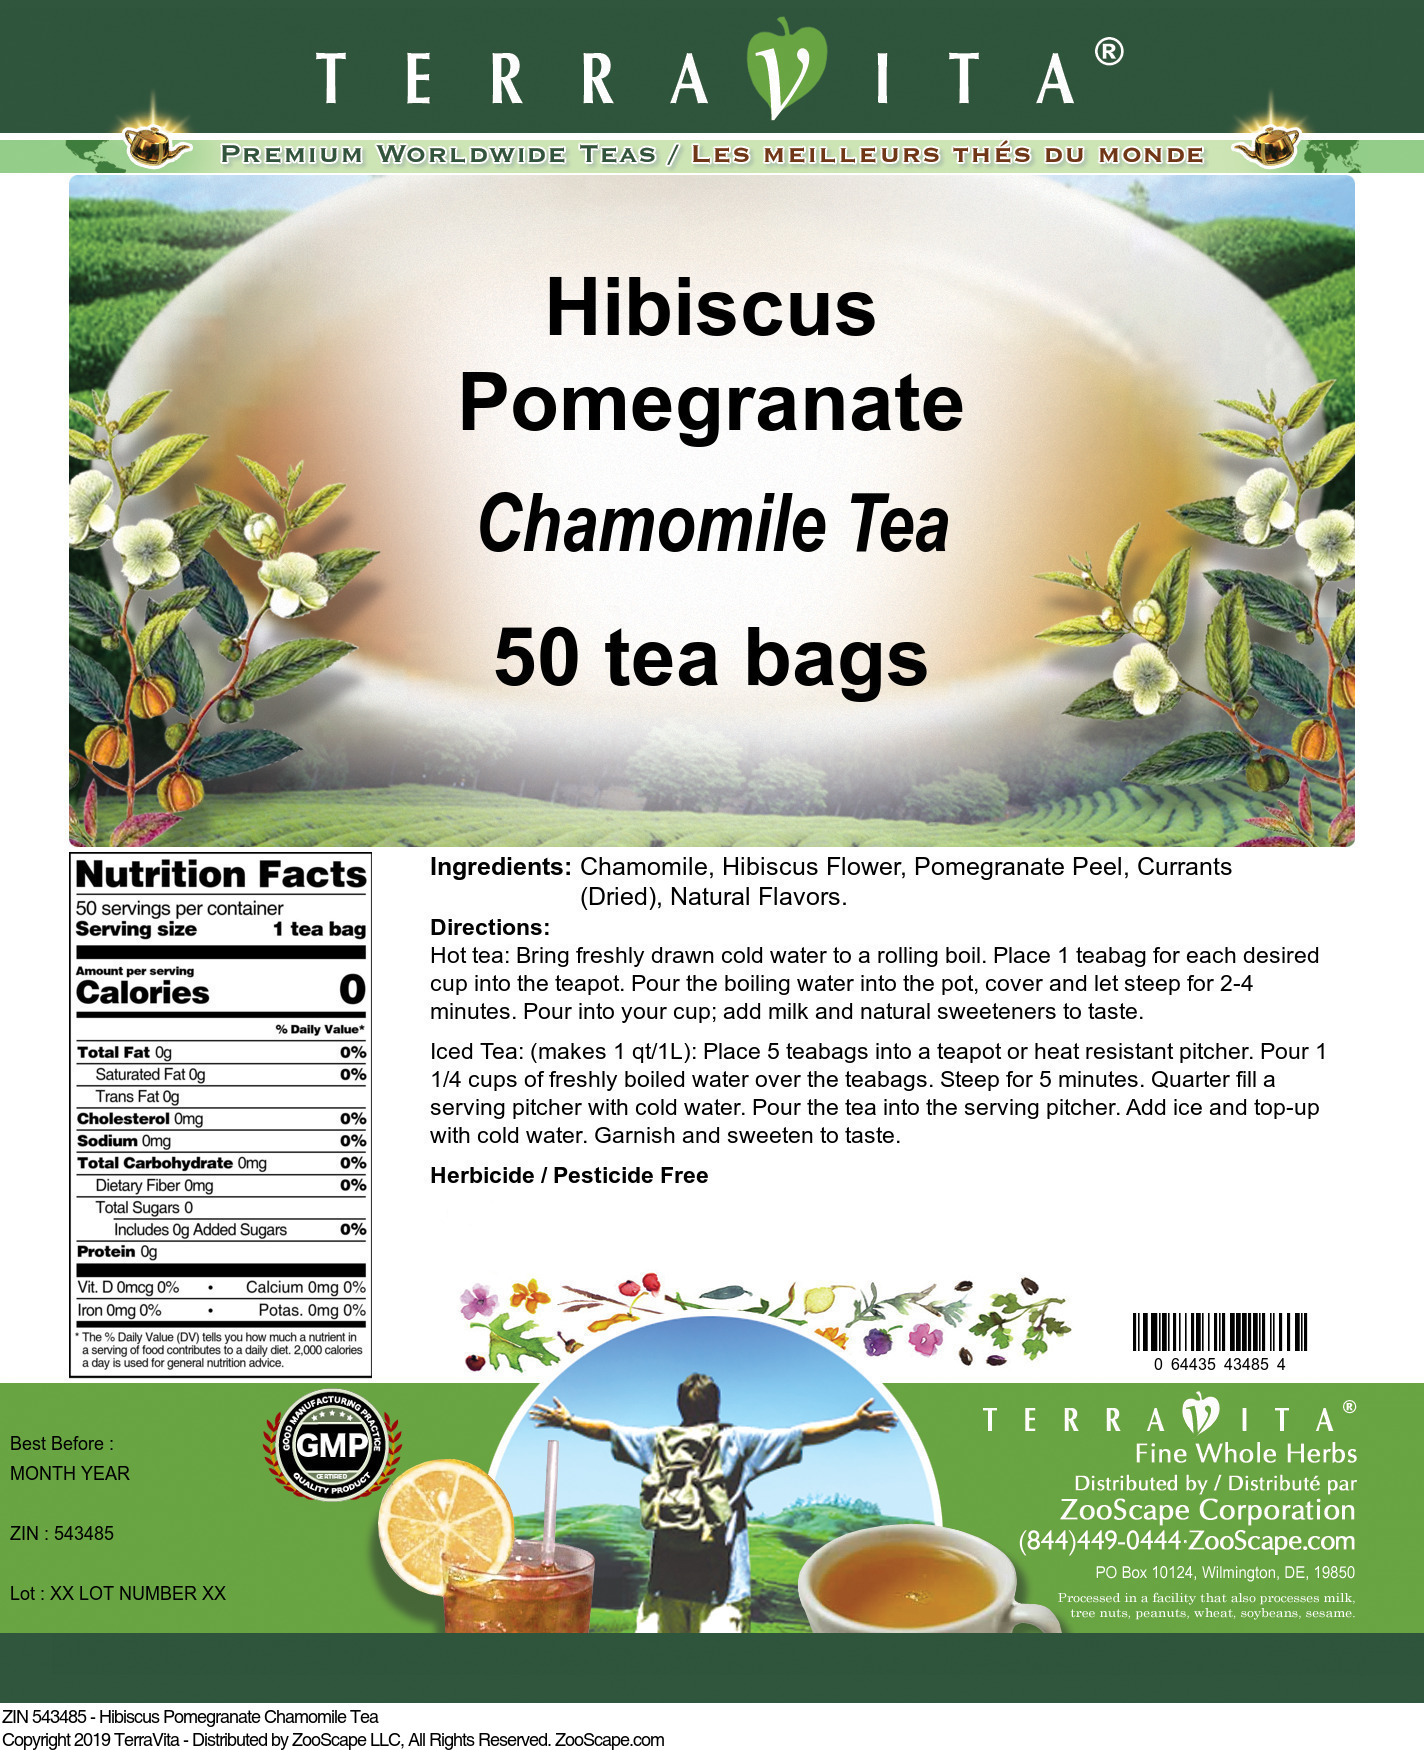 Hibiscus Pomegranate Chamomile Tea - Label